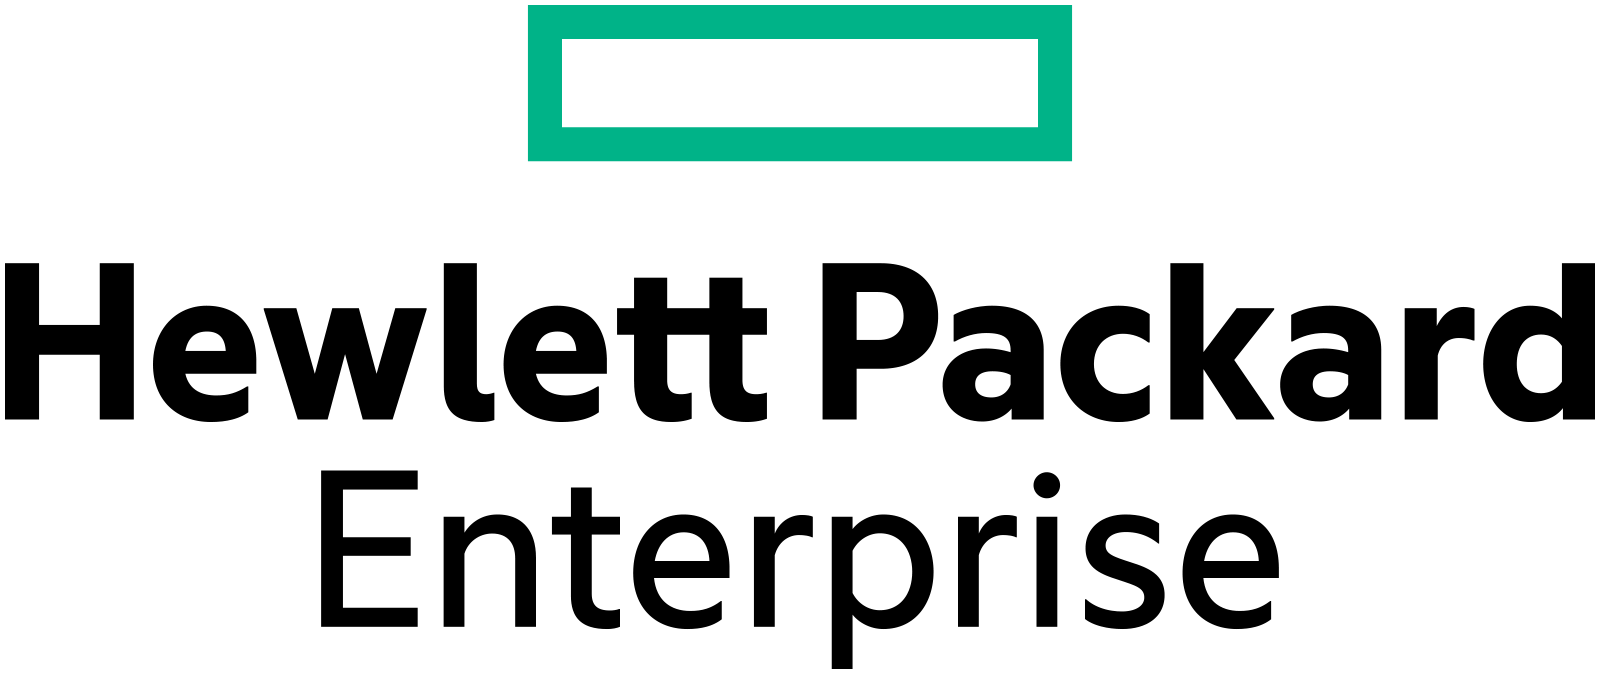 HP Enterprise Services Logo - Hewlett Packard Enterprise (HPE) Receives a Hold from BMO Capital